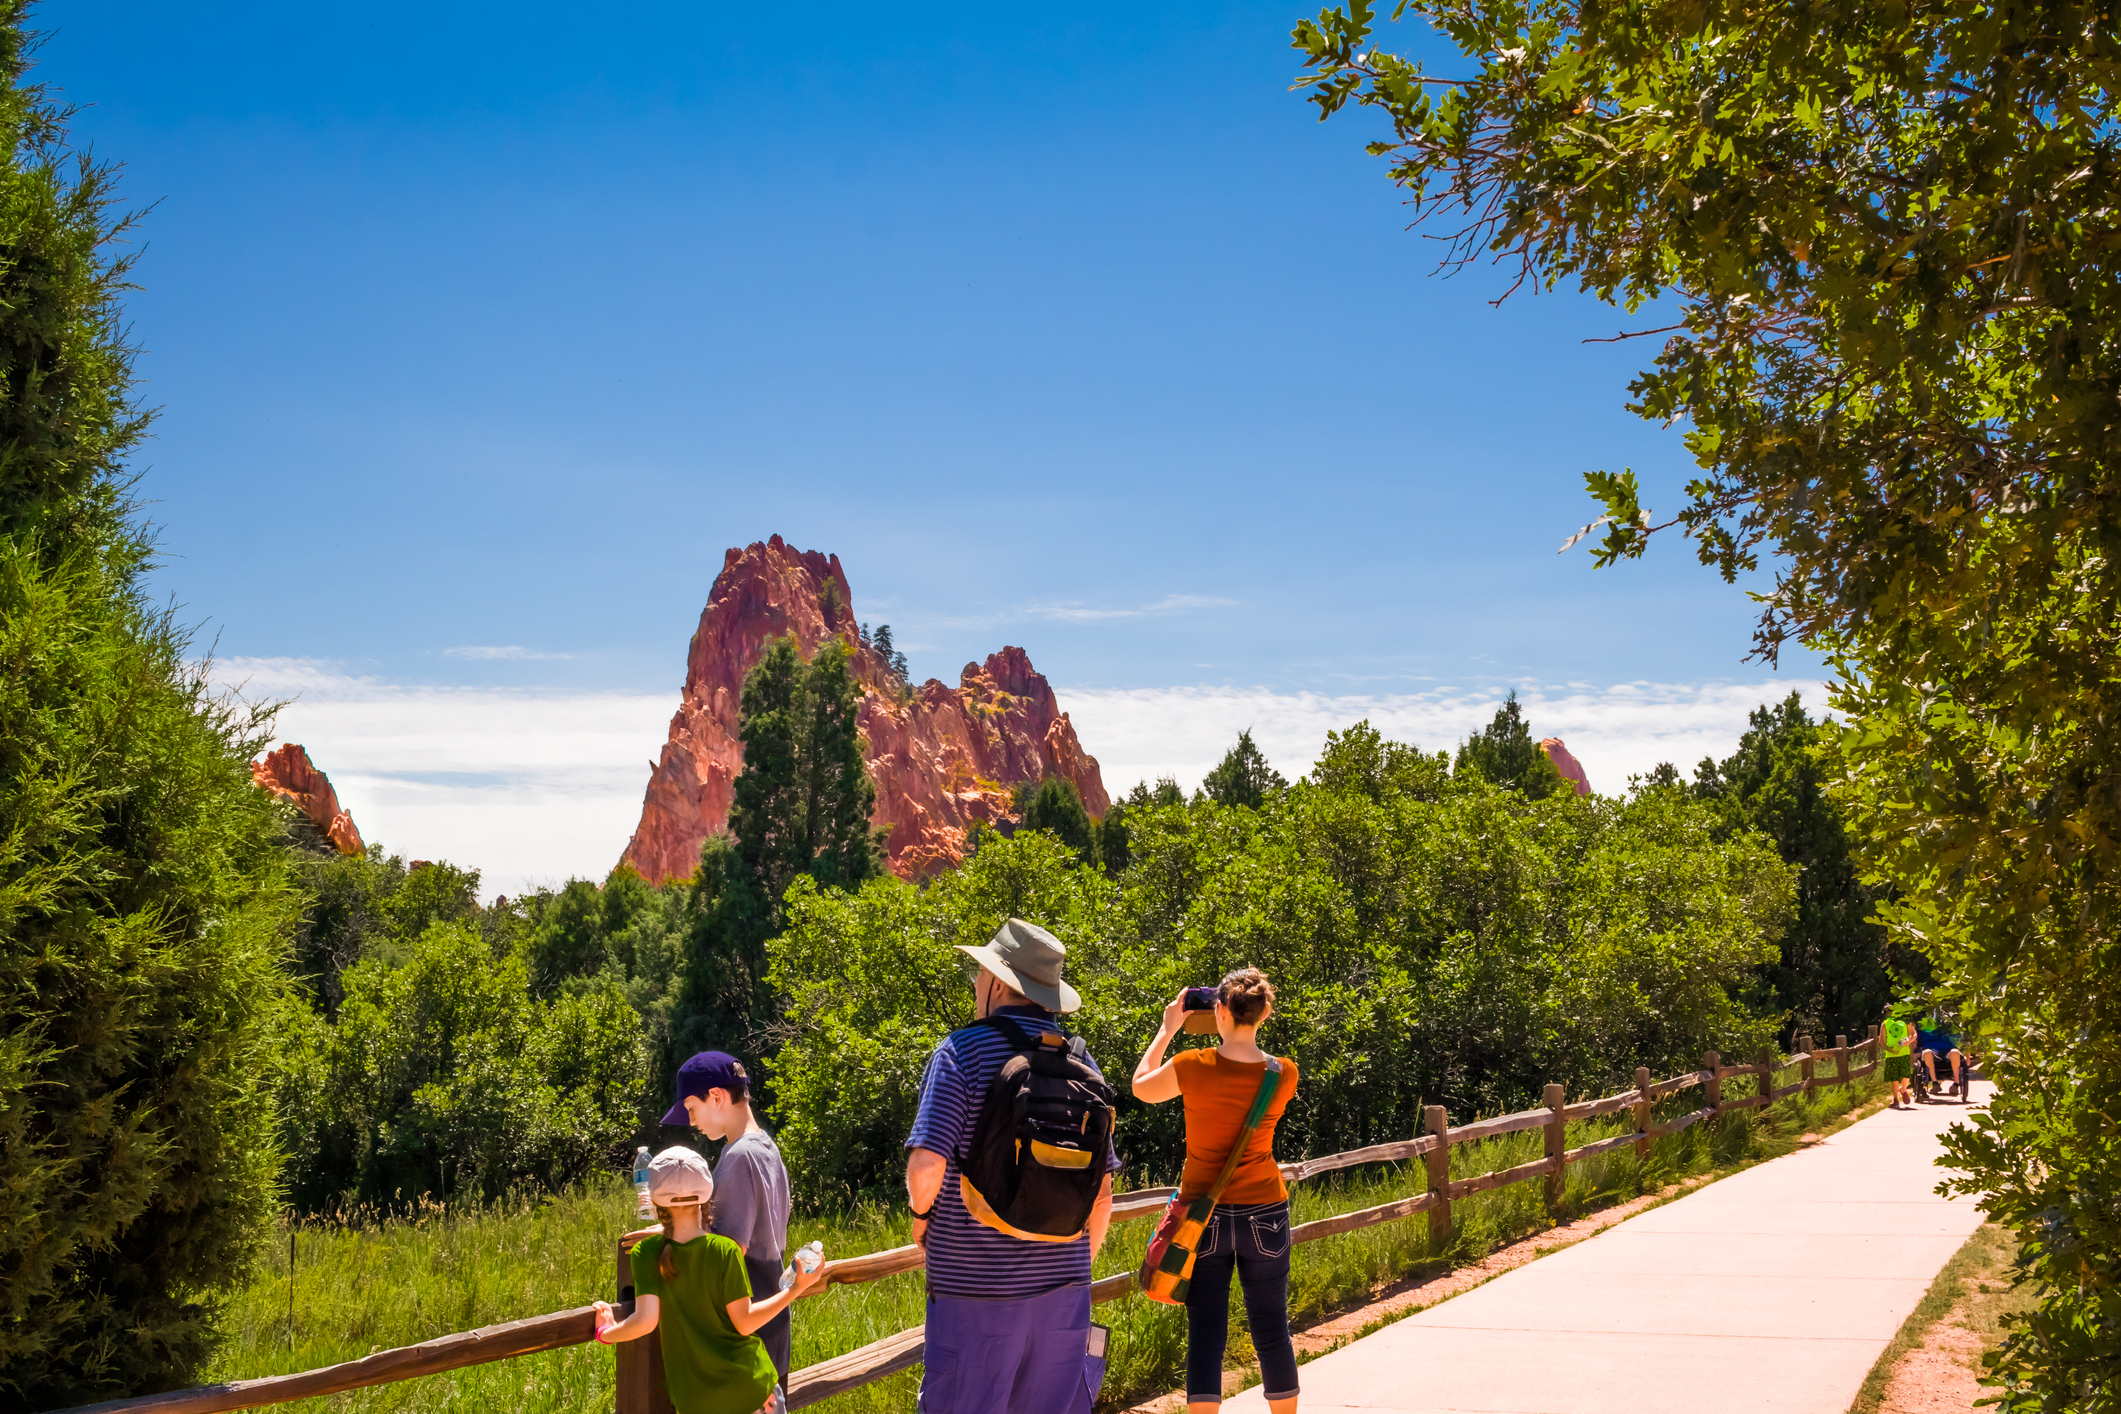 A family observes a tall rocky mountain on horizon.